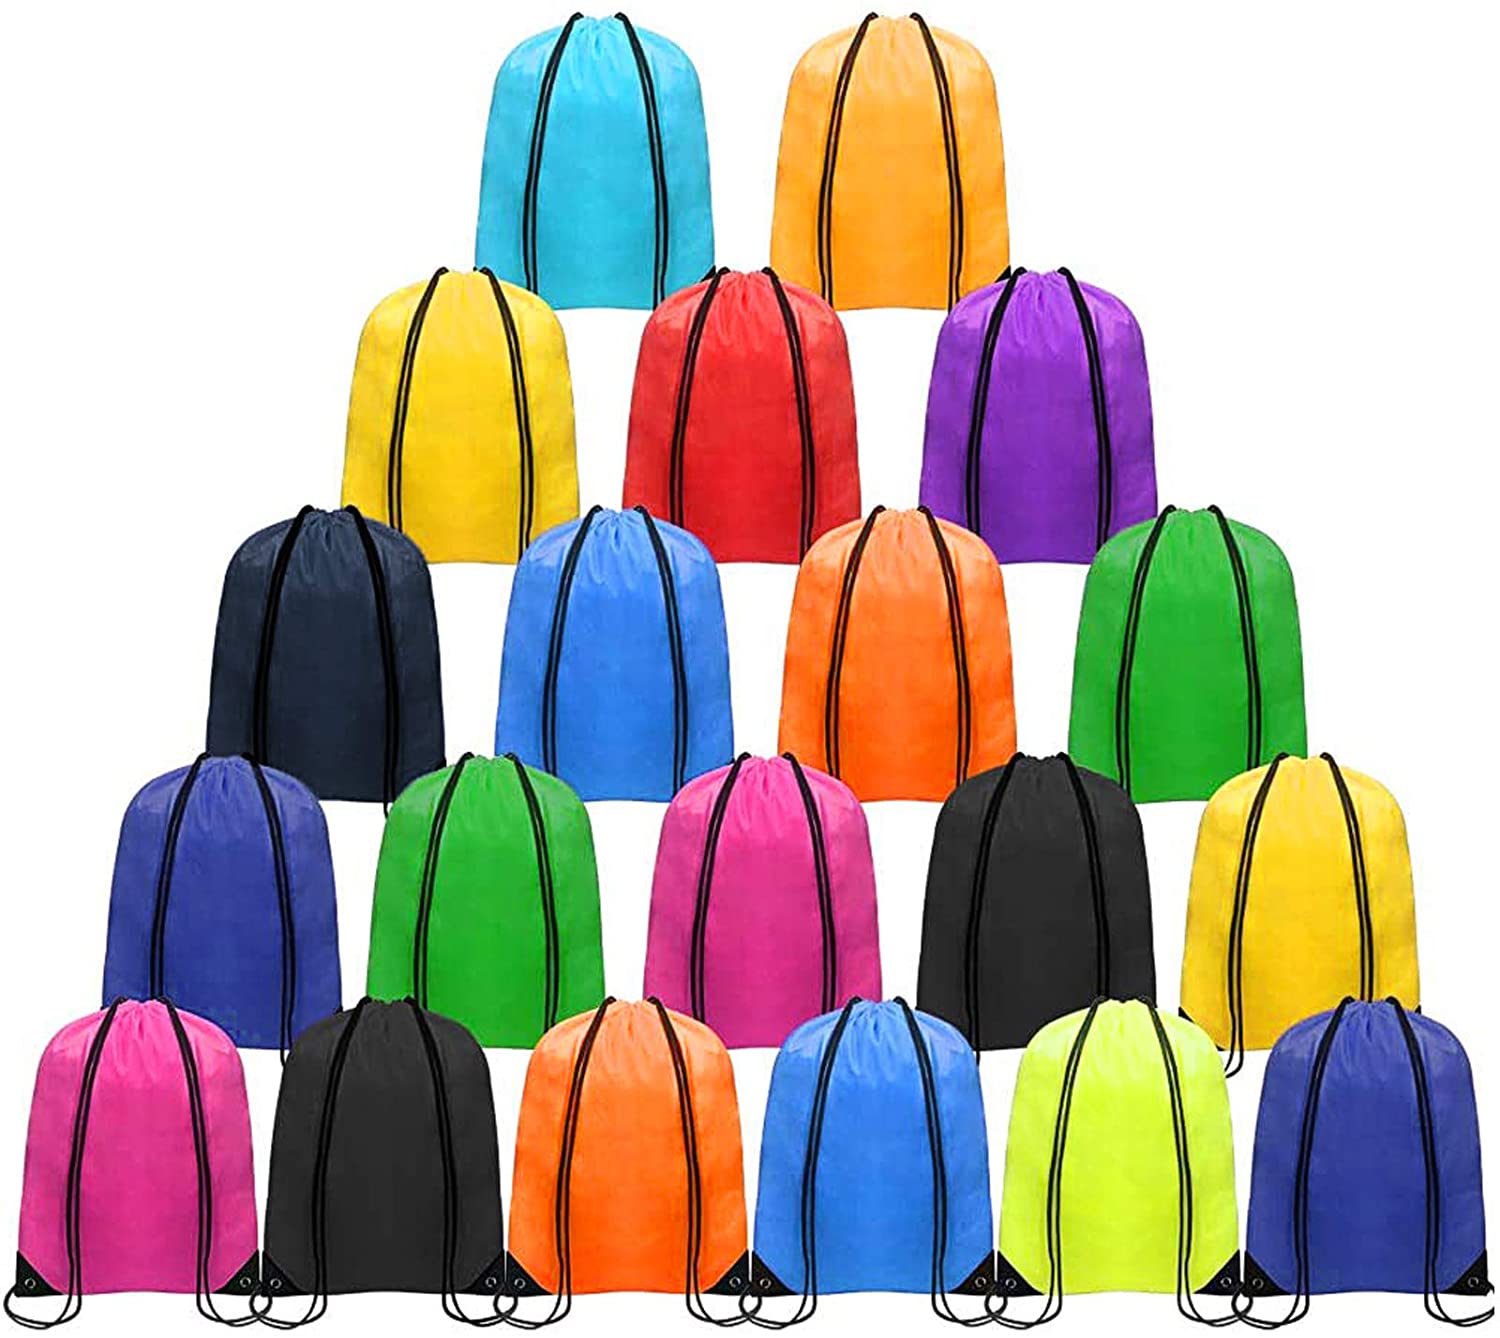 CHEPULA Drawstring Backpack Bags Cinch Sacks String Portable Backpack for School,Travel,Sports&Storage